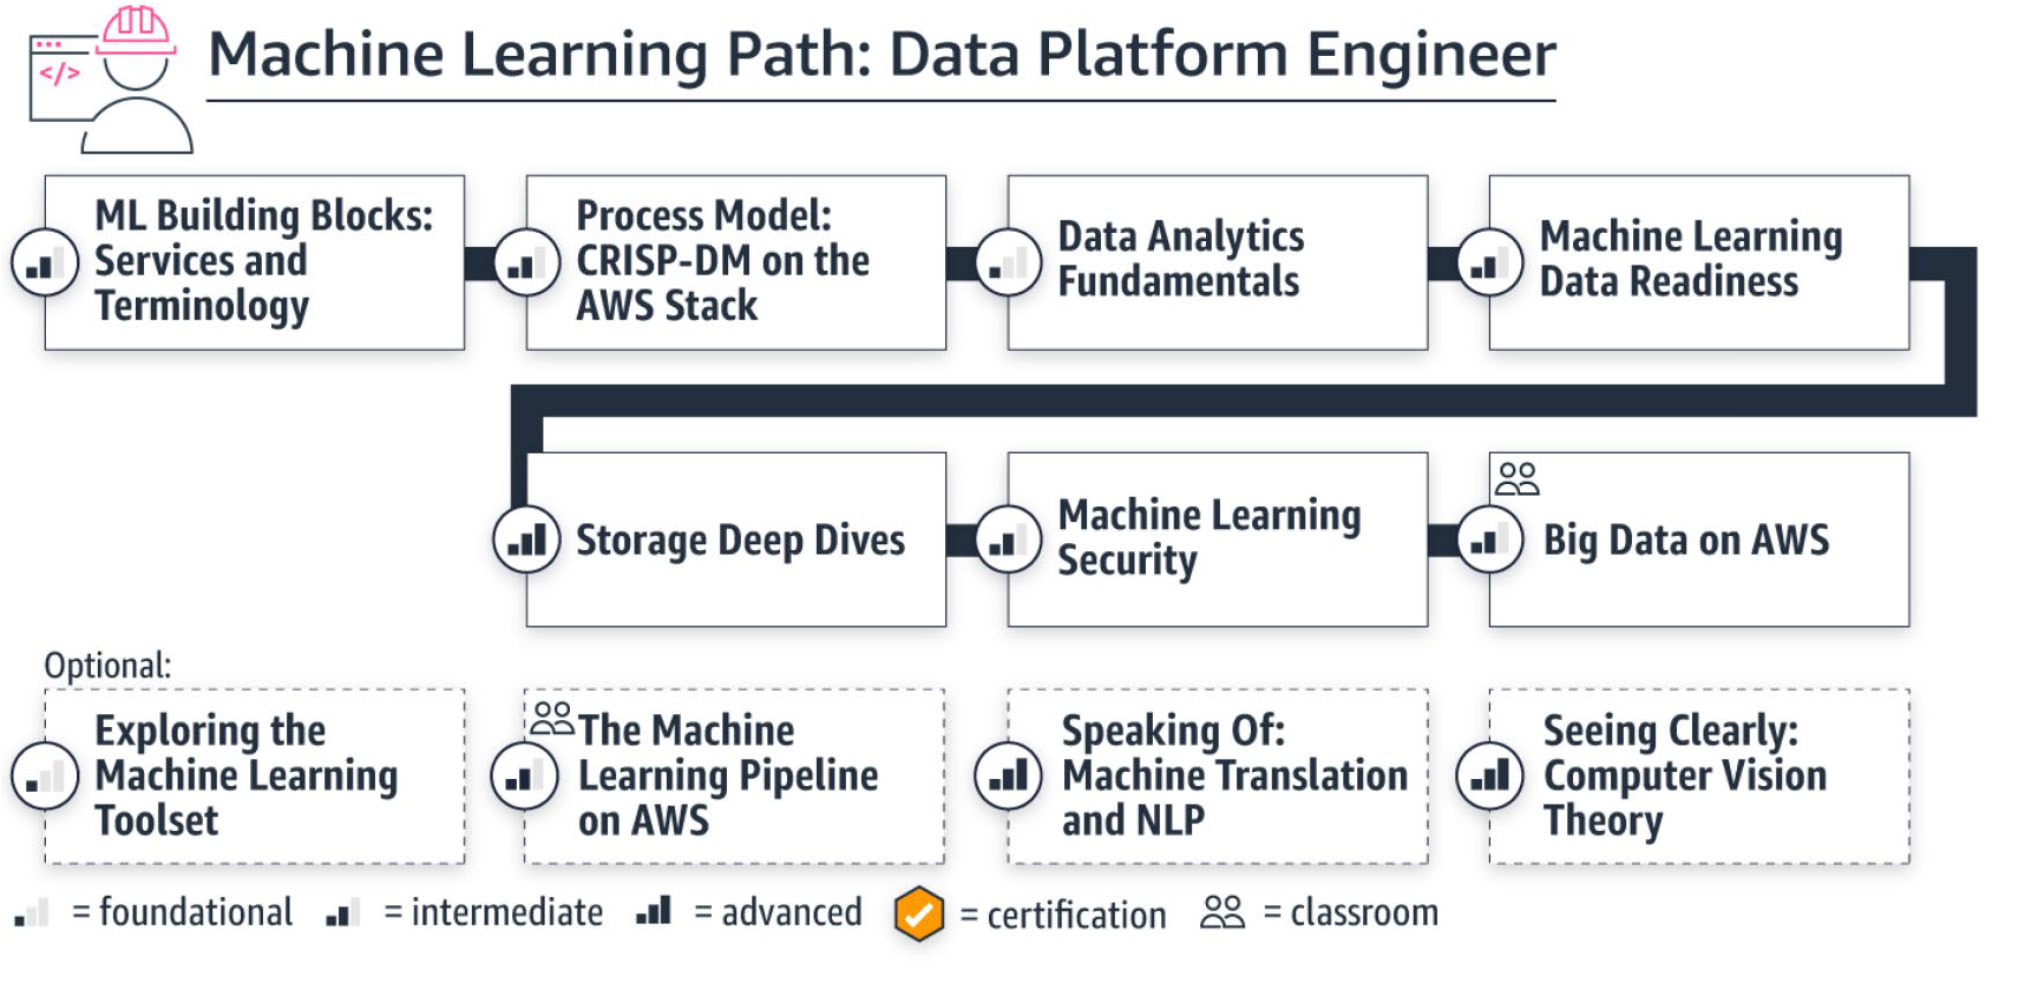 Machine Learning Path: Data Platform Engineer